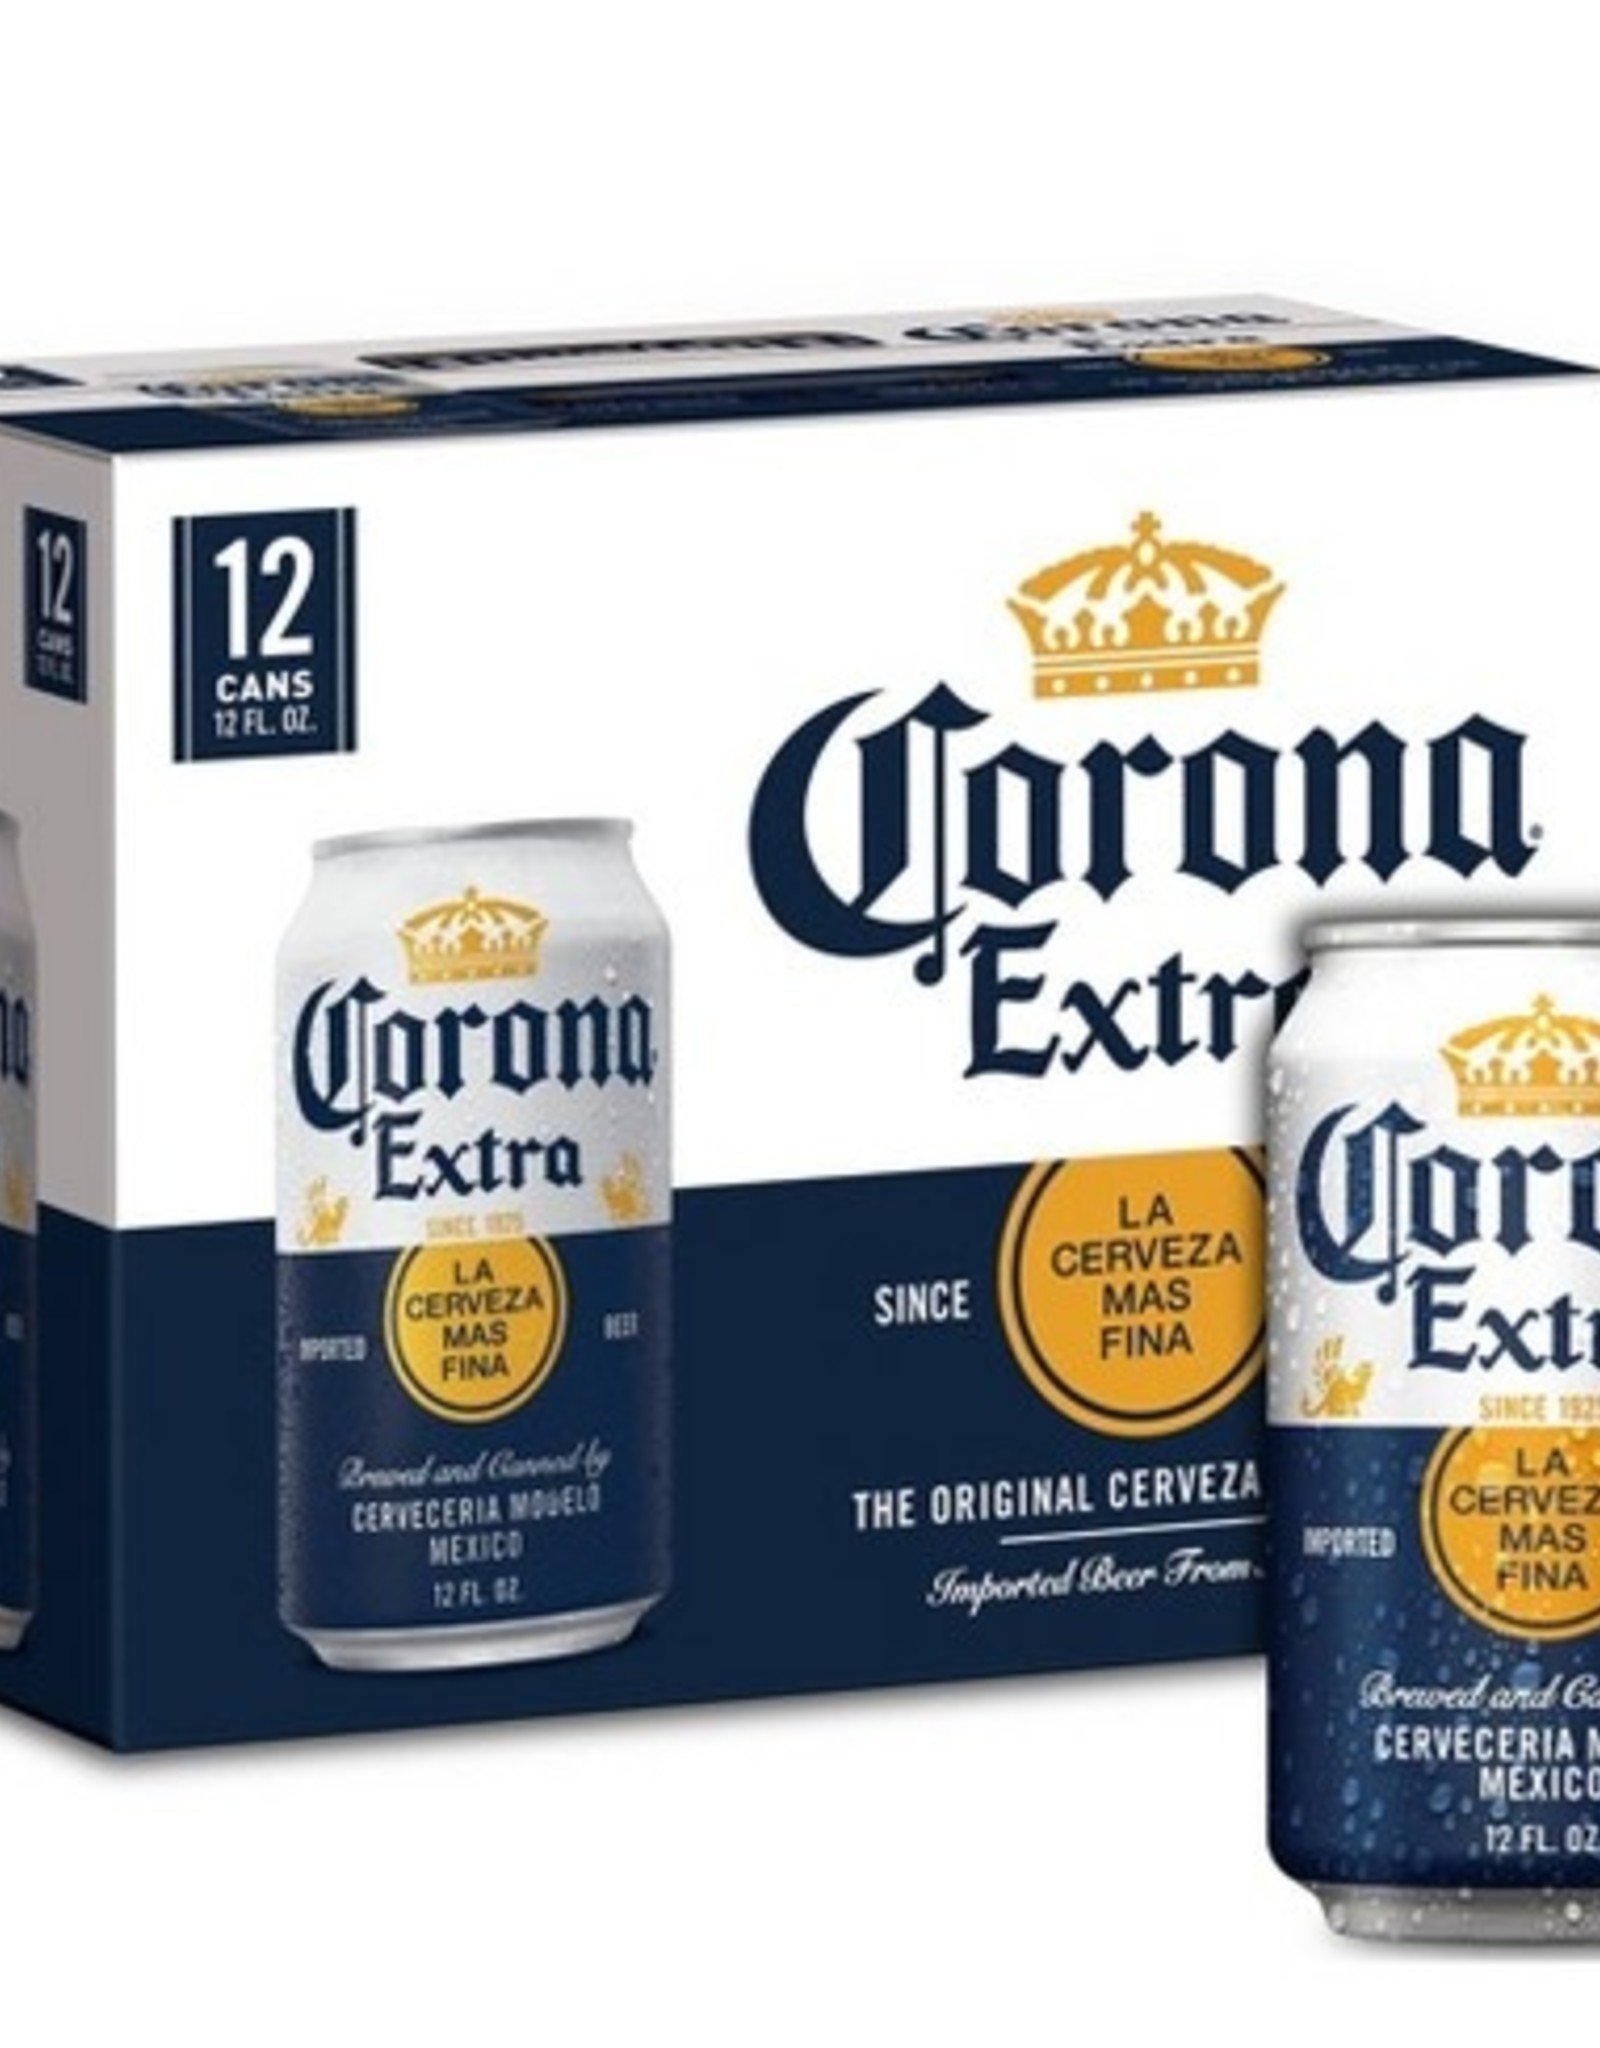 Corona Extra 12x12 oz cans